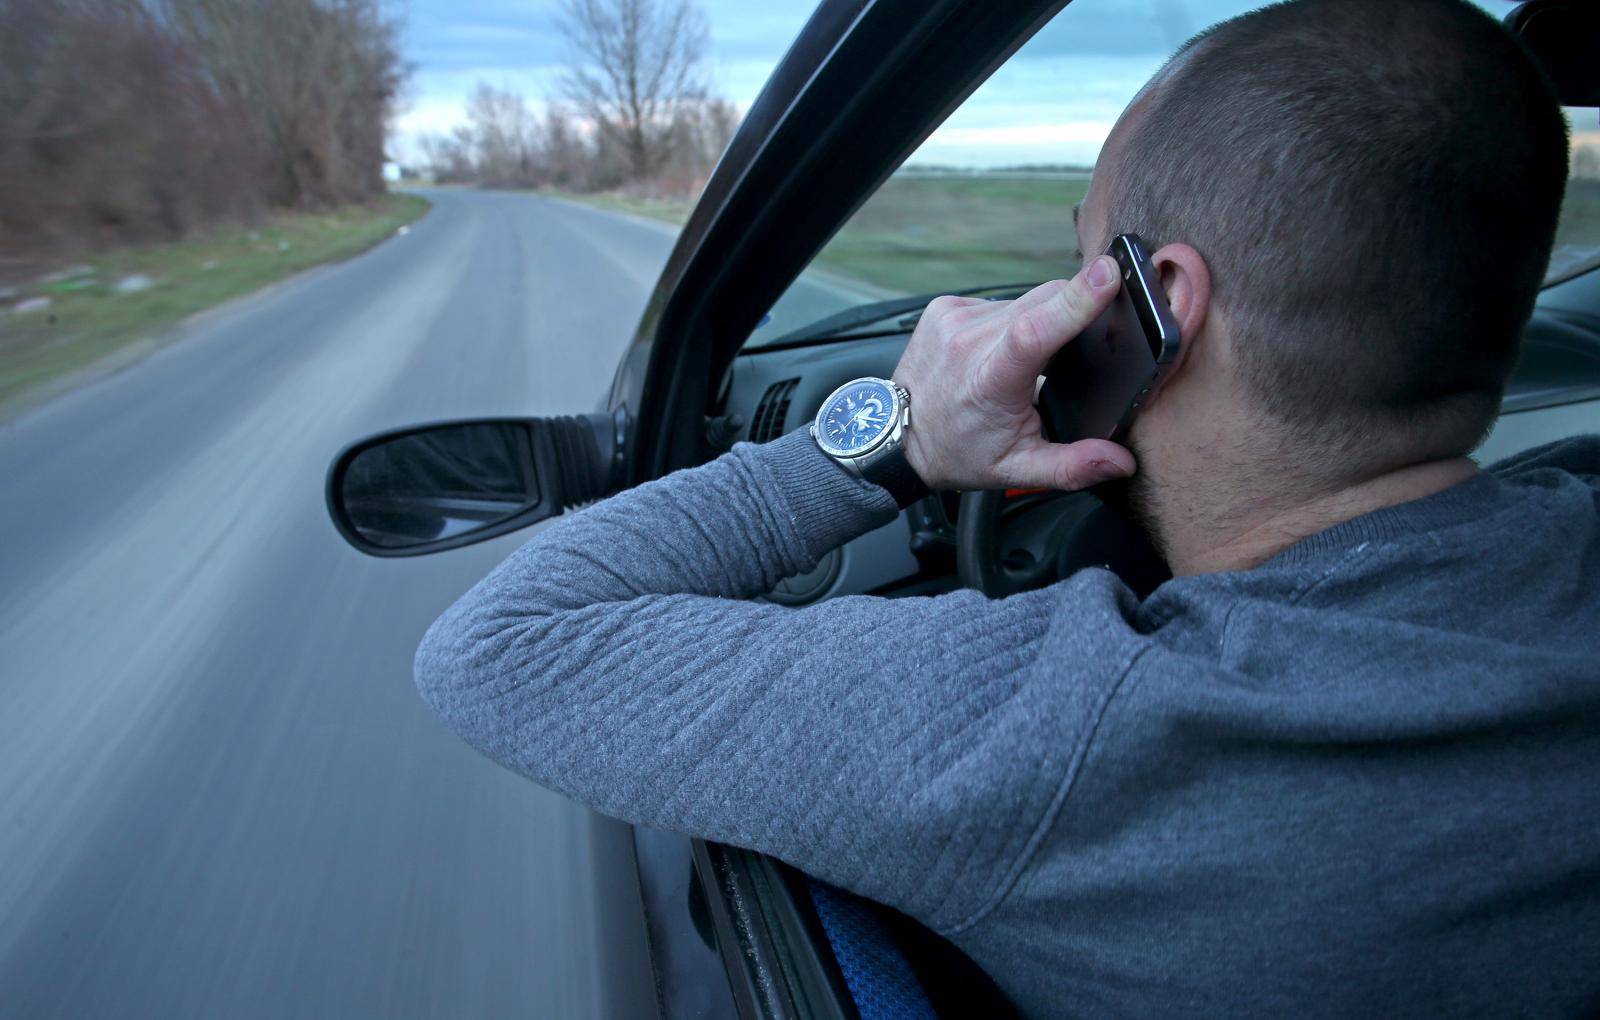 Koristite mobitel dok vozite? Mogli bi vas kazniti s 1000 kn